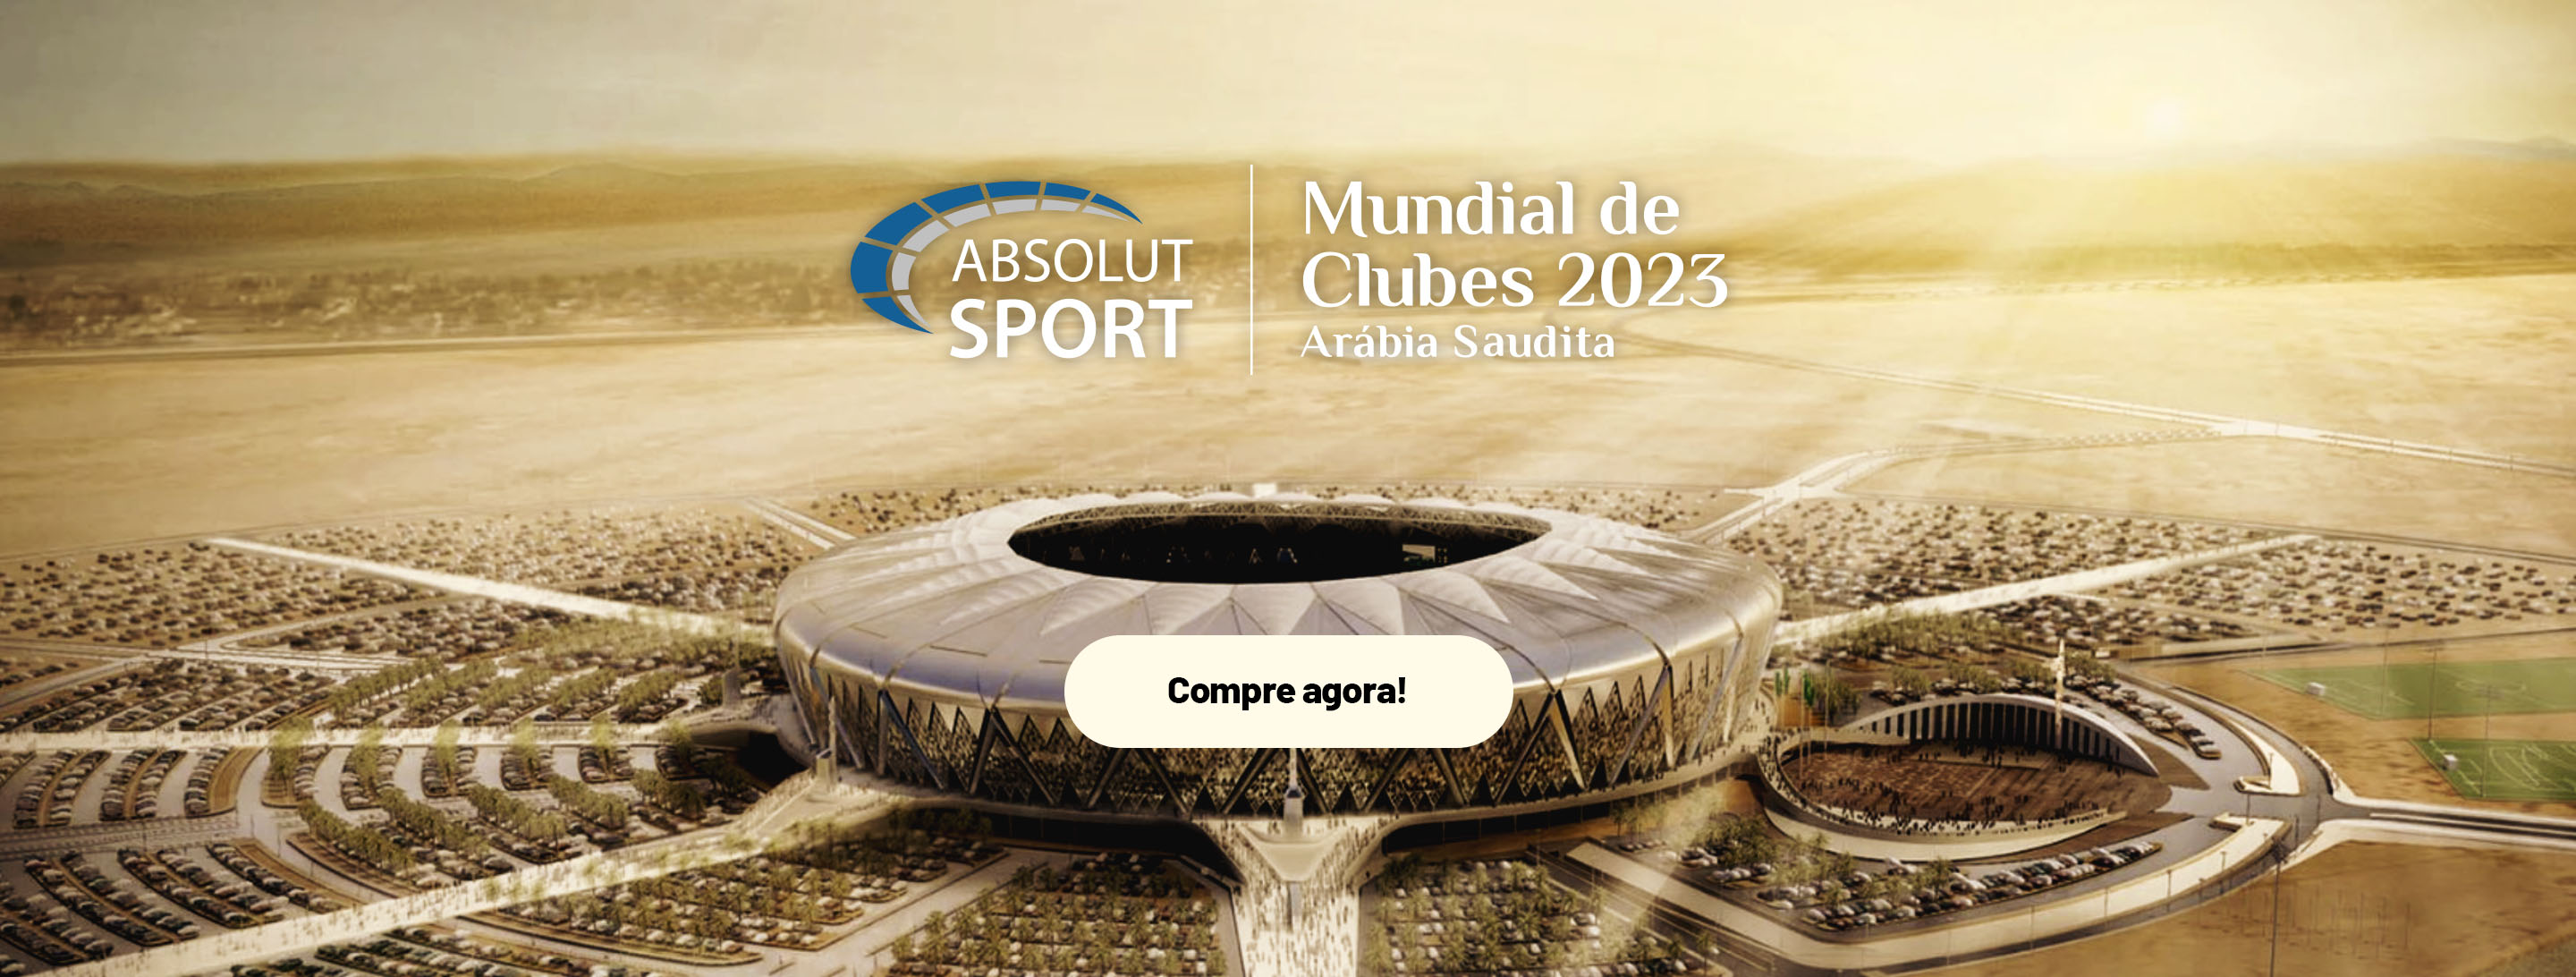 Mundial de Clubes 2023 - ABSOLUT Sport - Arabia Saudita